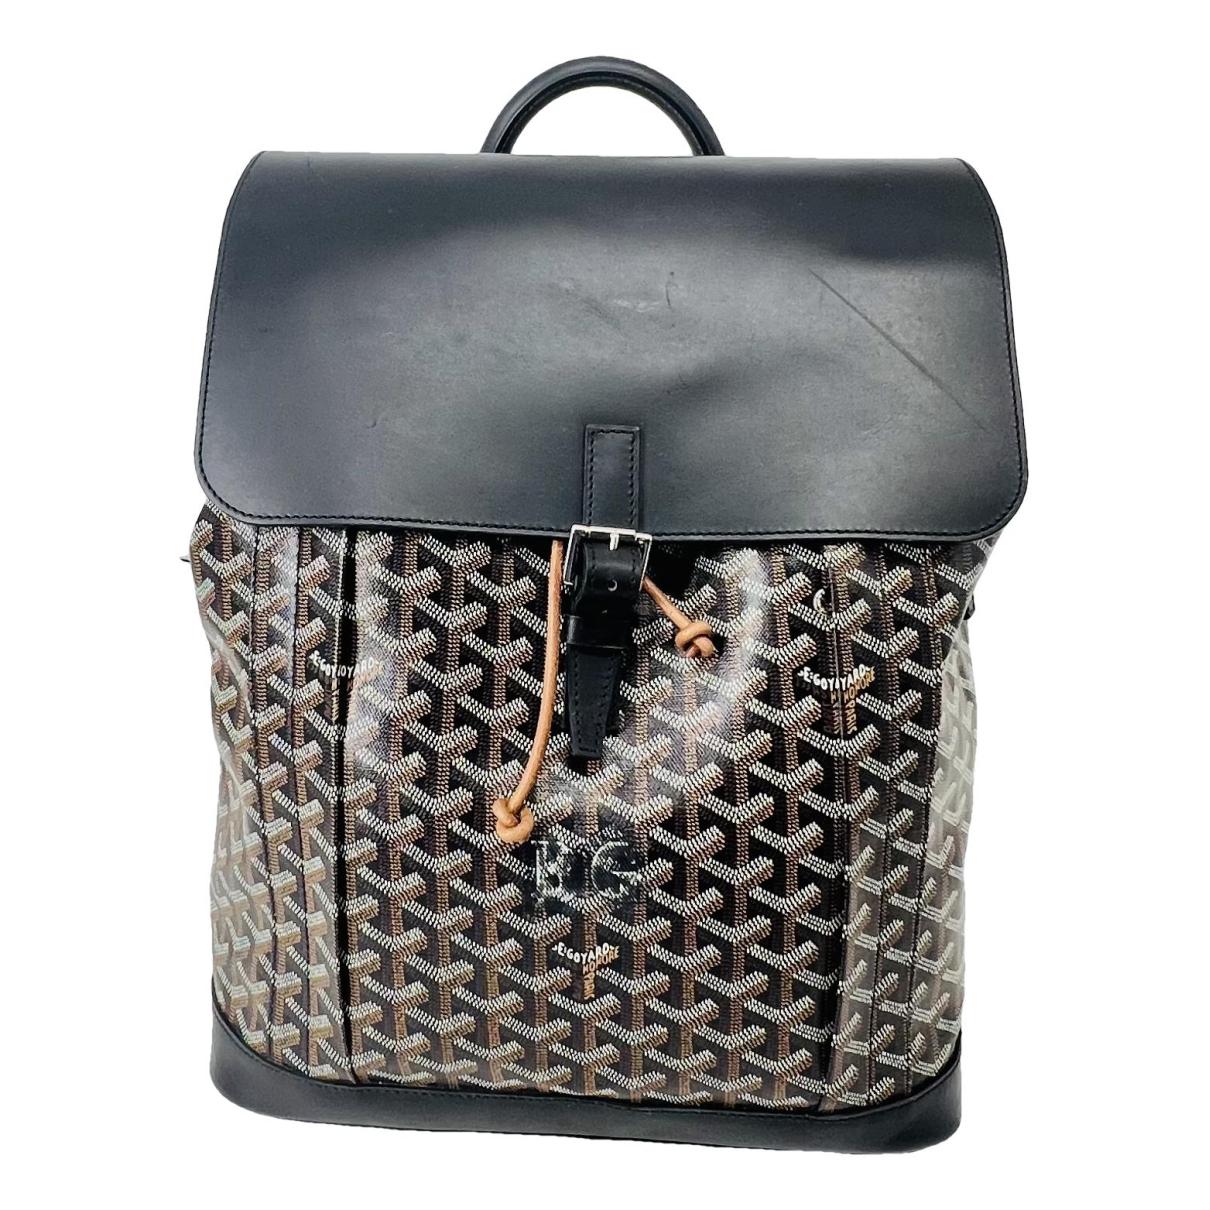 L'alpin leather backpack Goyard Black in Leather - 32252548